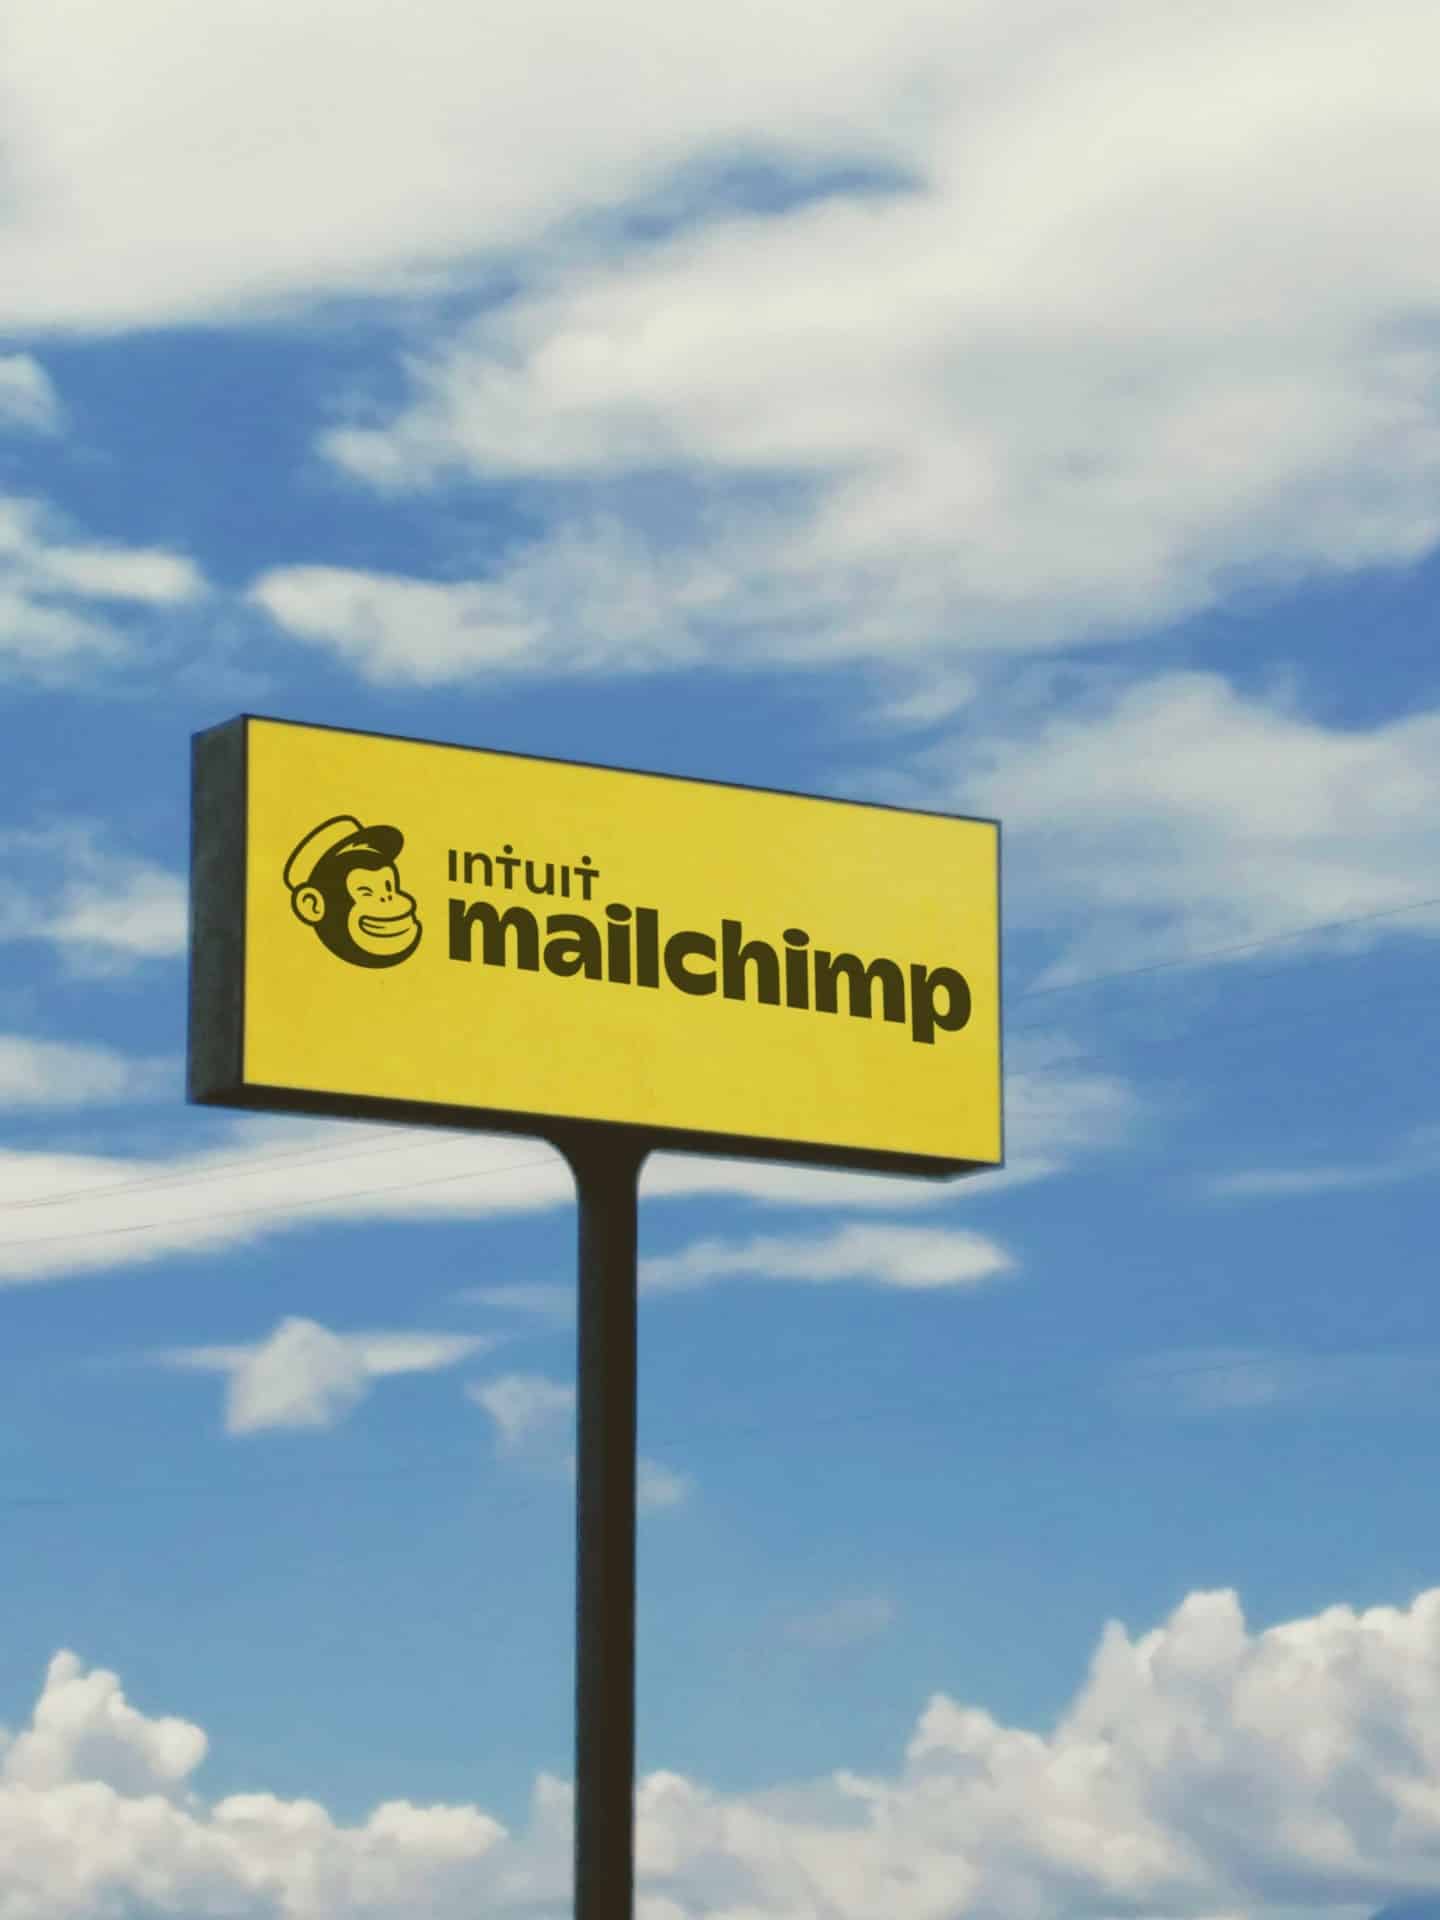 Mailchimp email marketing service